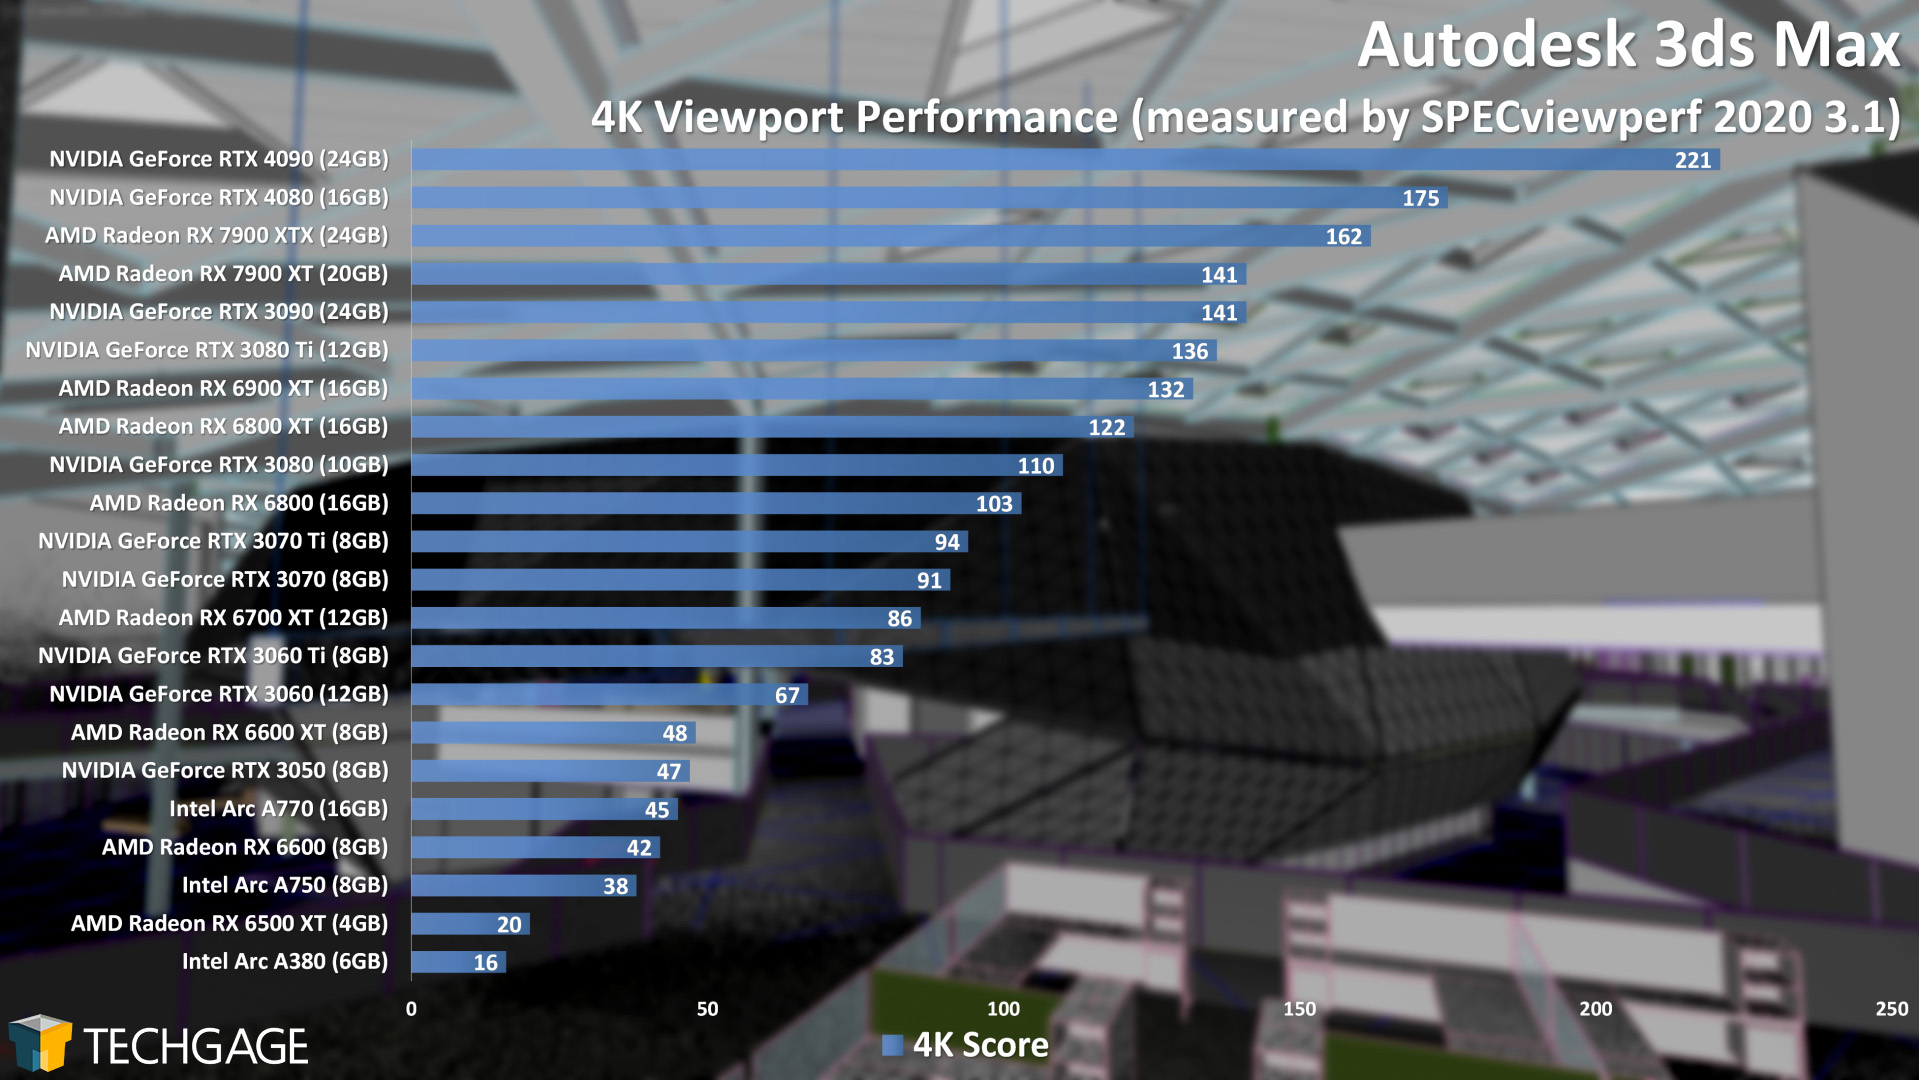 Autodesk 3ds Max 4K Viewport Performance (AMD Radeon RX 7900 XT and XTX)